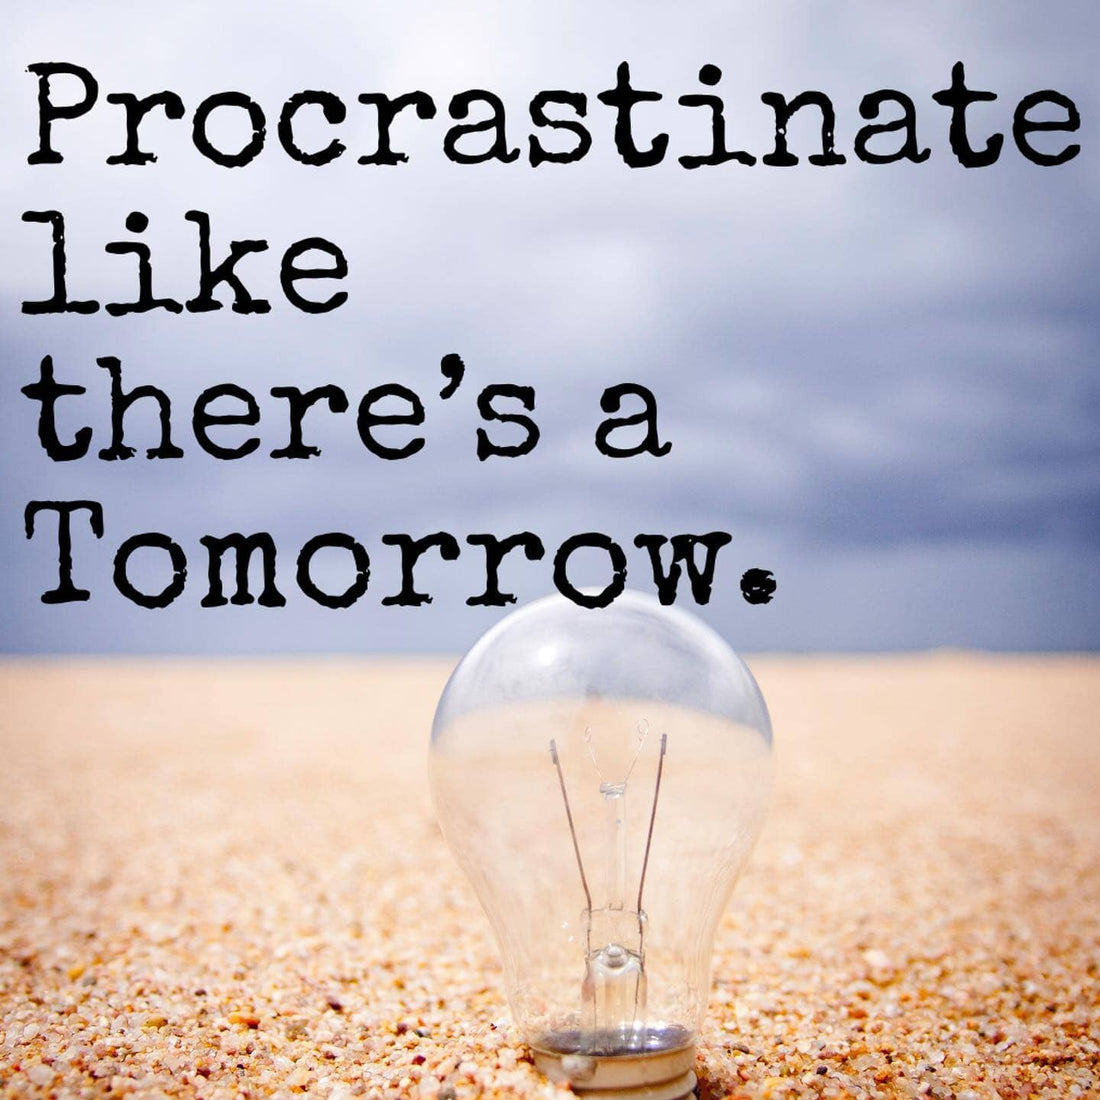 Procrastinate like there’s a tomorrow meme